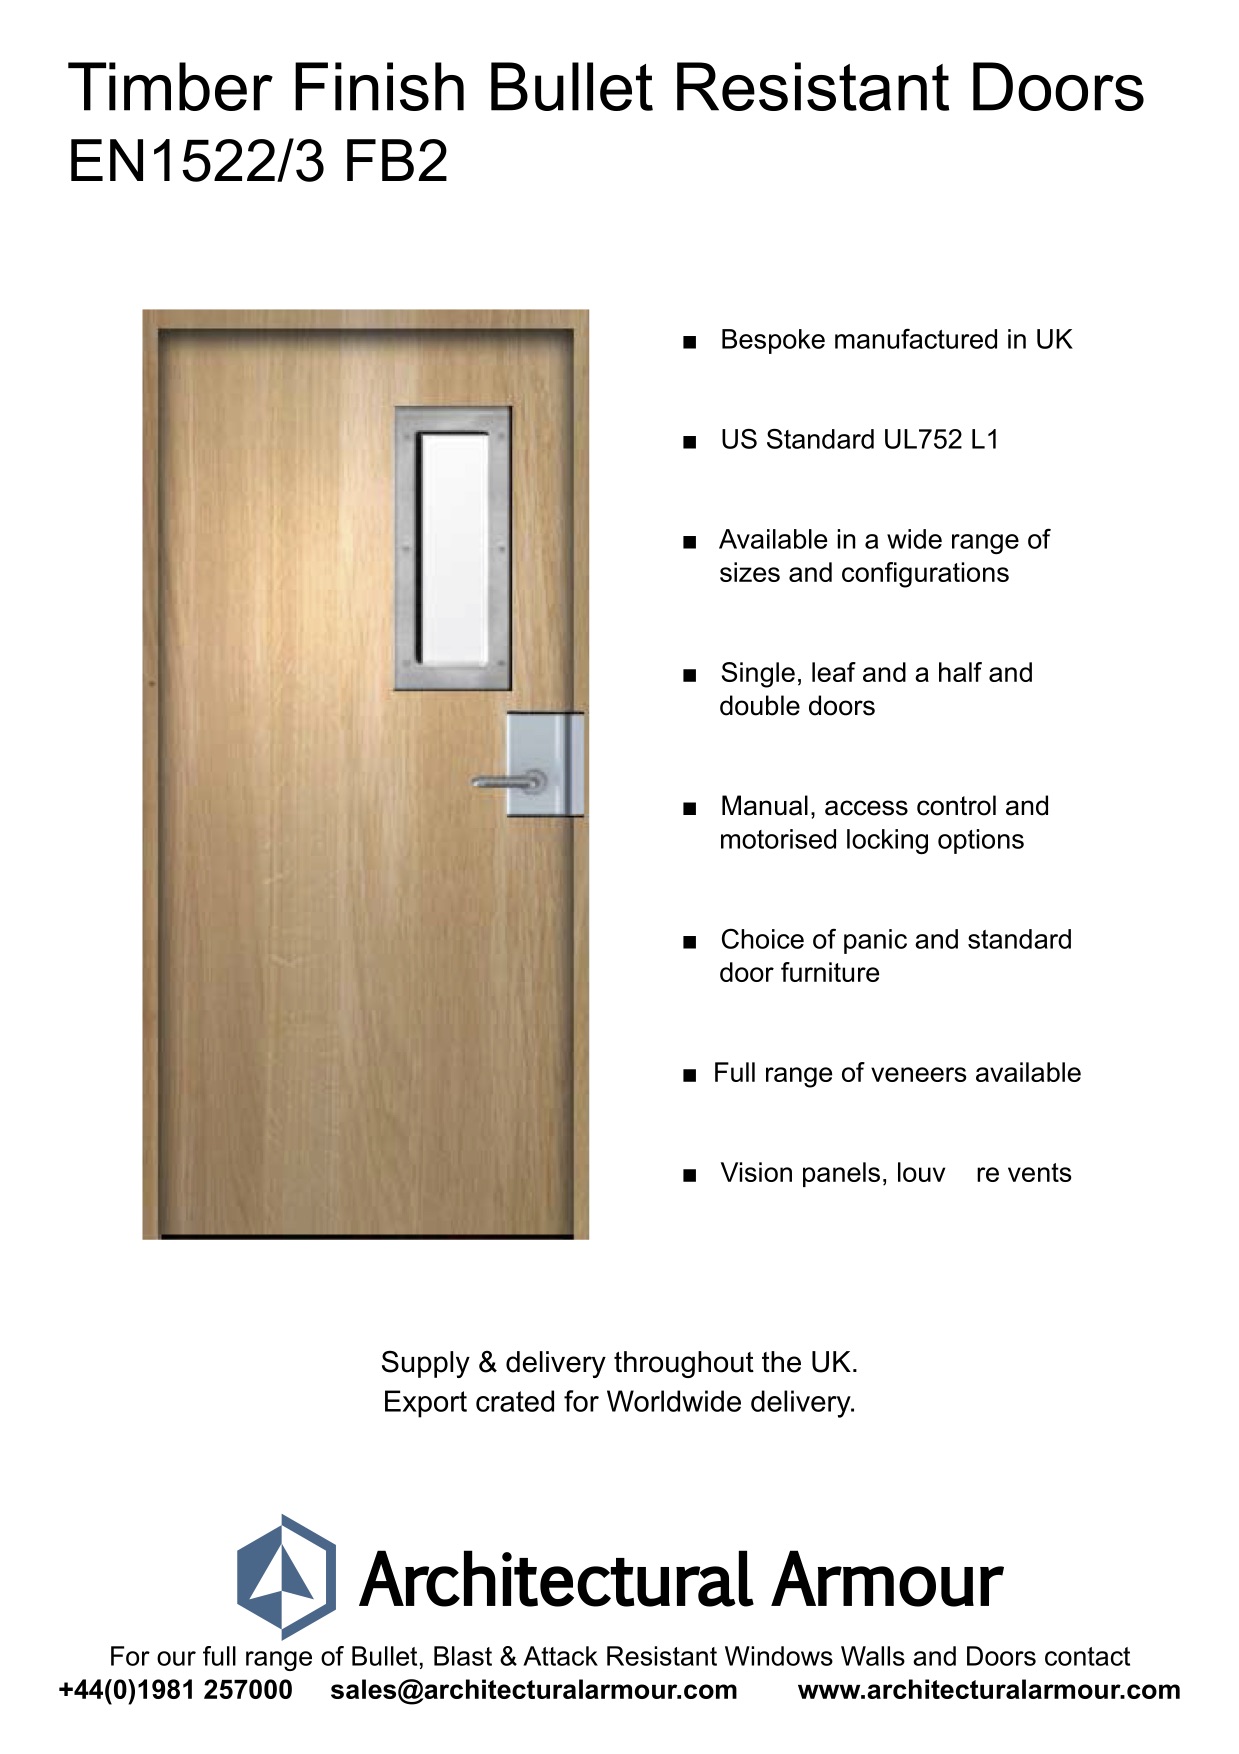 EN1522-3-FB2-Single-Slim-Vision-Panel-Bullet-Resistant-Timber-Finish-Door